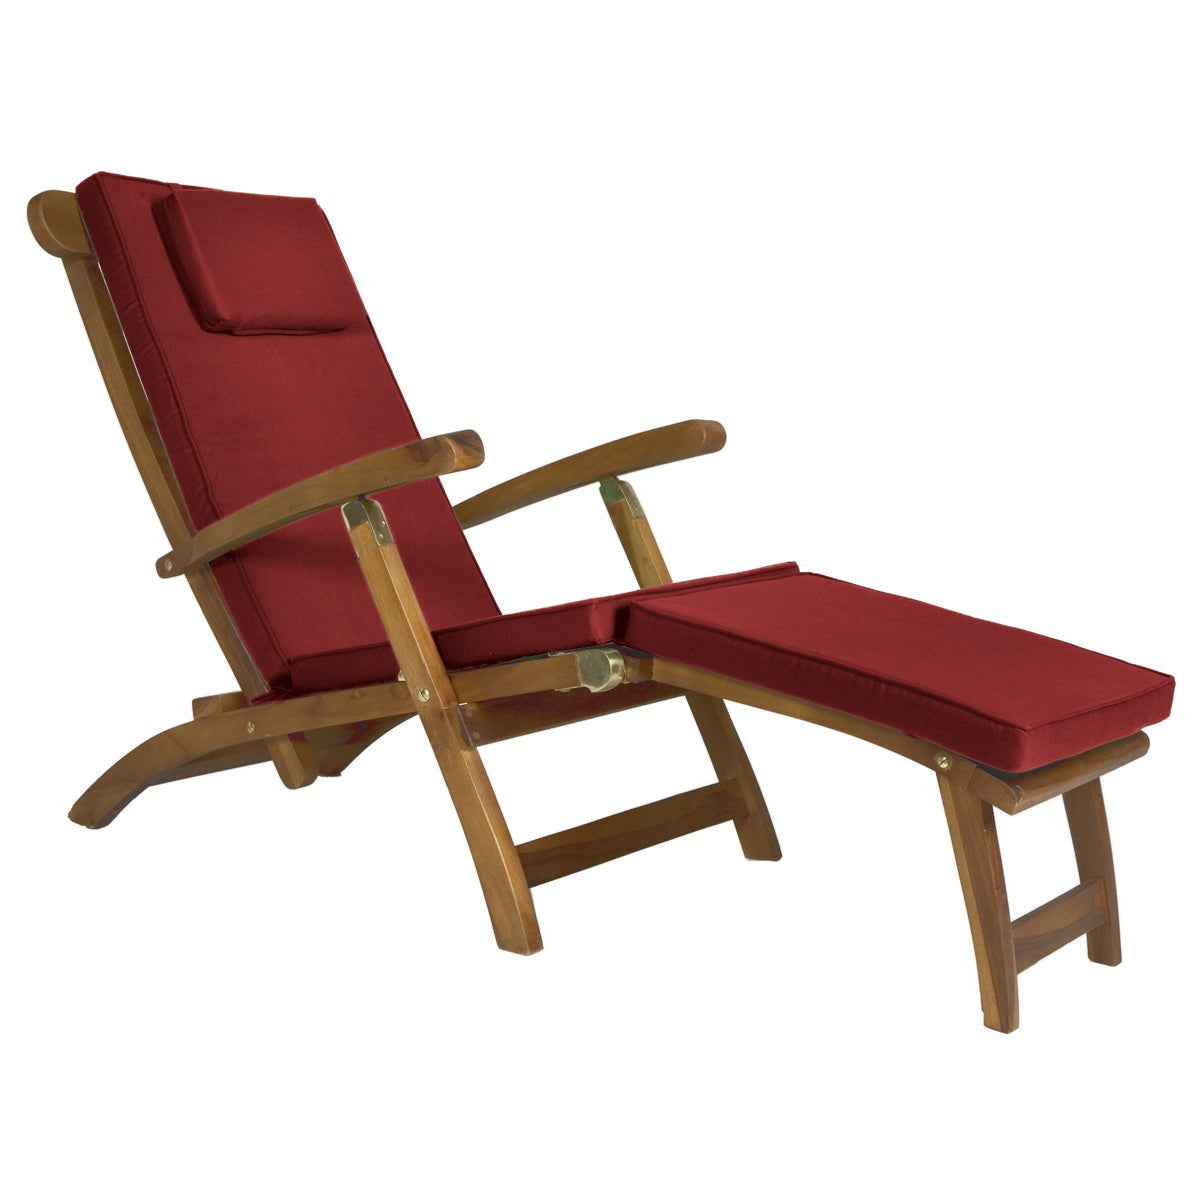 Teak Steamer Chair with Red Cushion